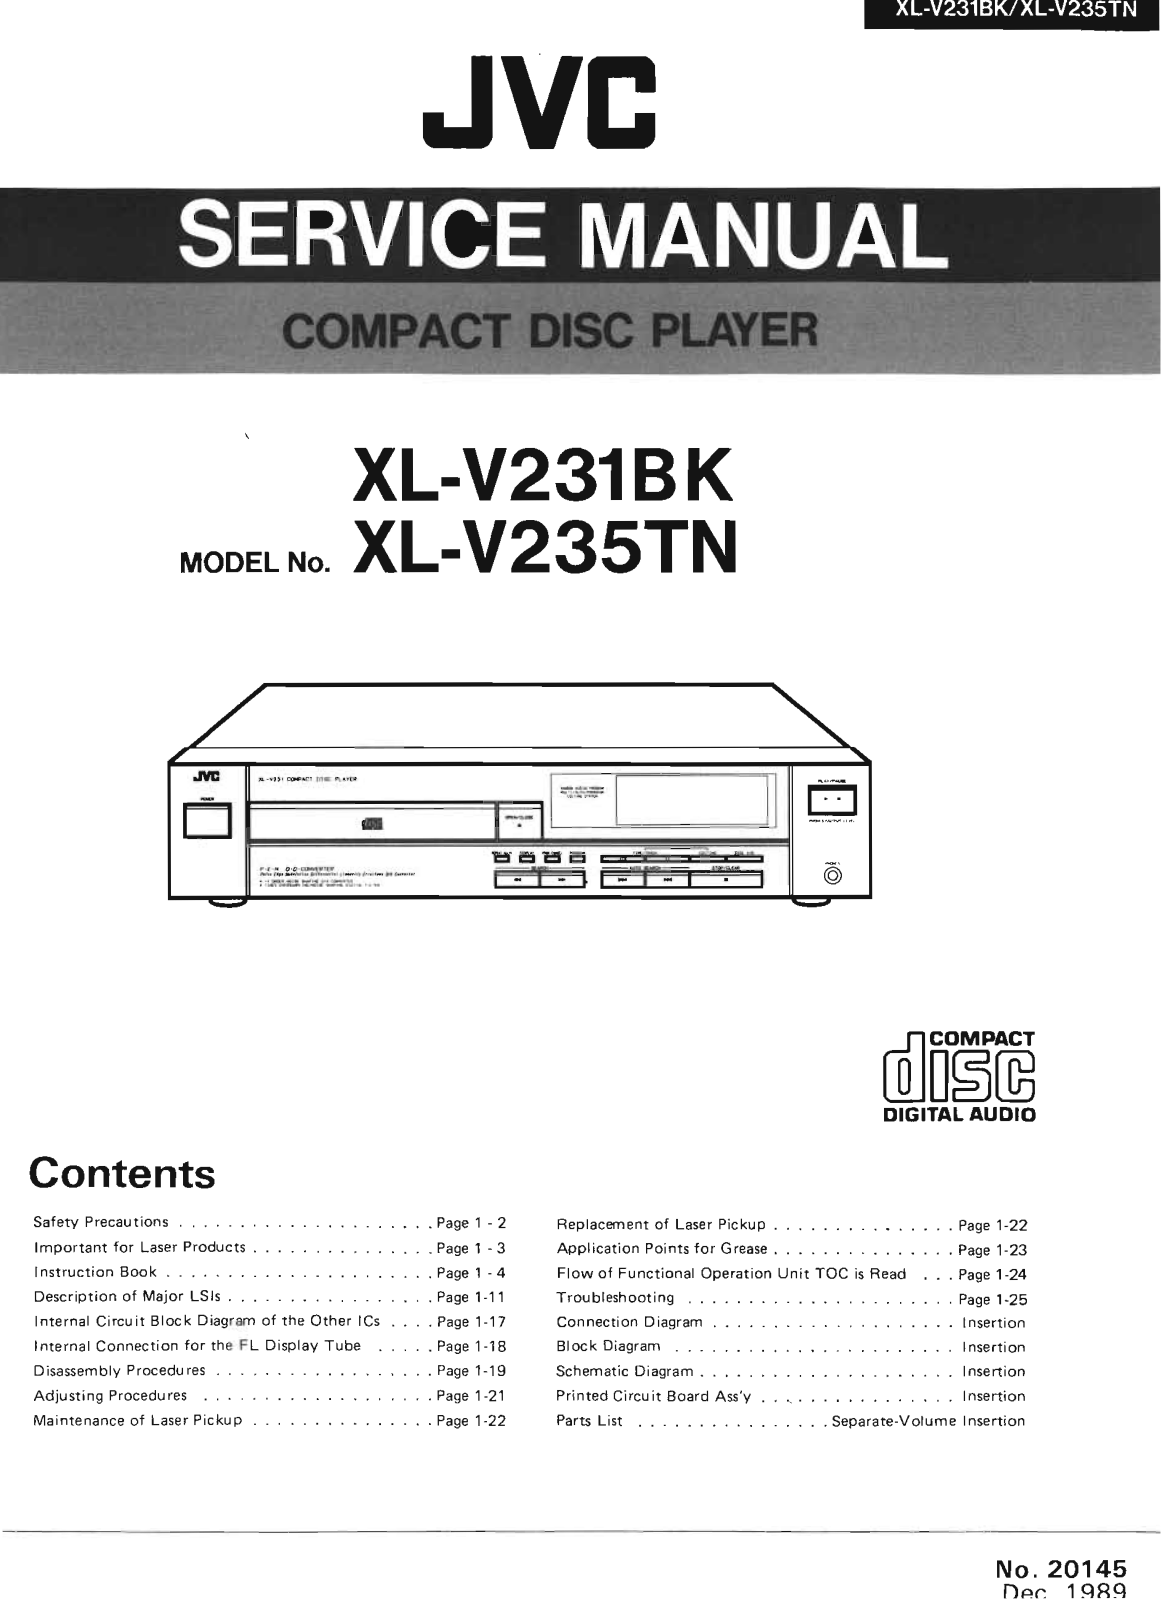 Jvc XL-V235-TN, XL-V231-BK Service Manual